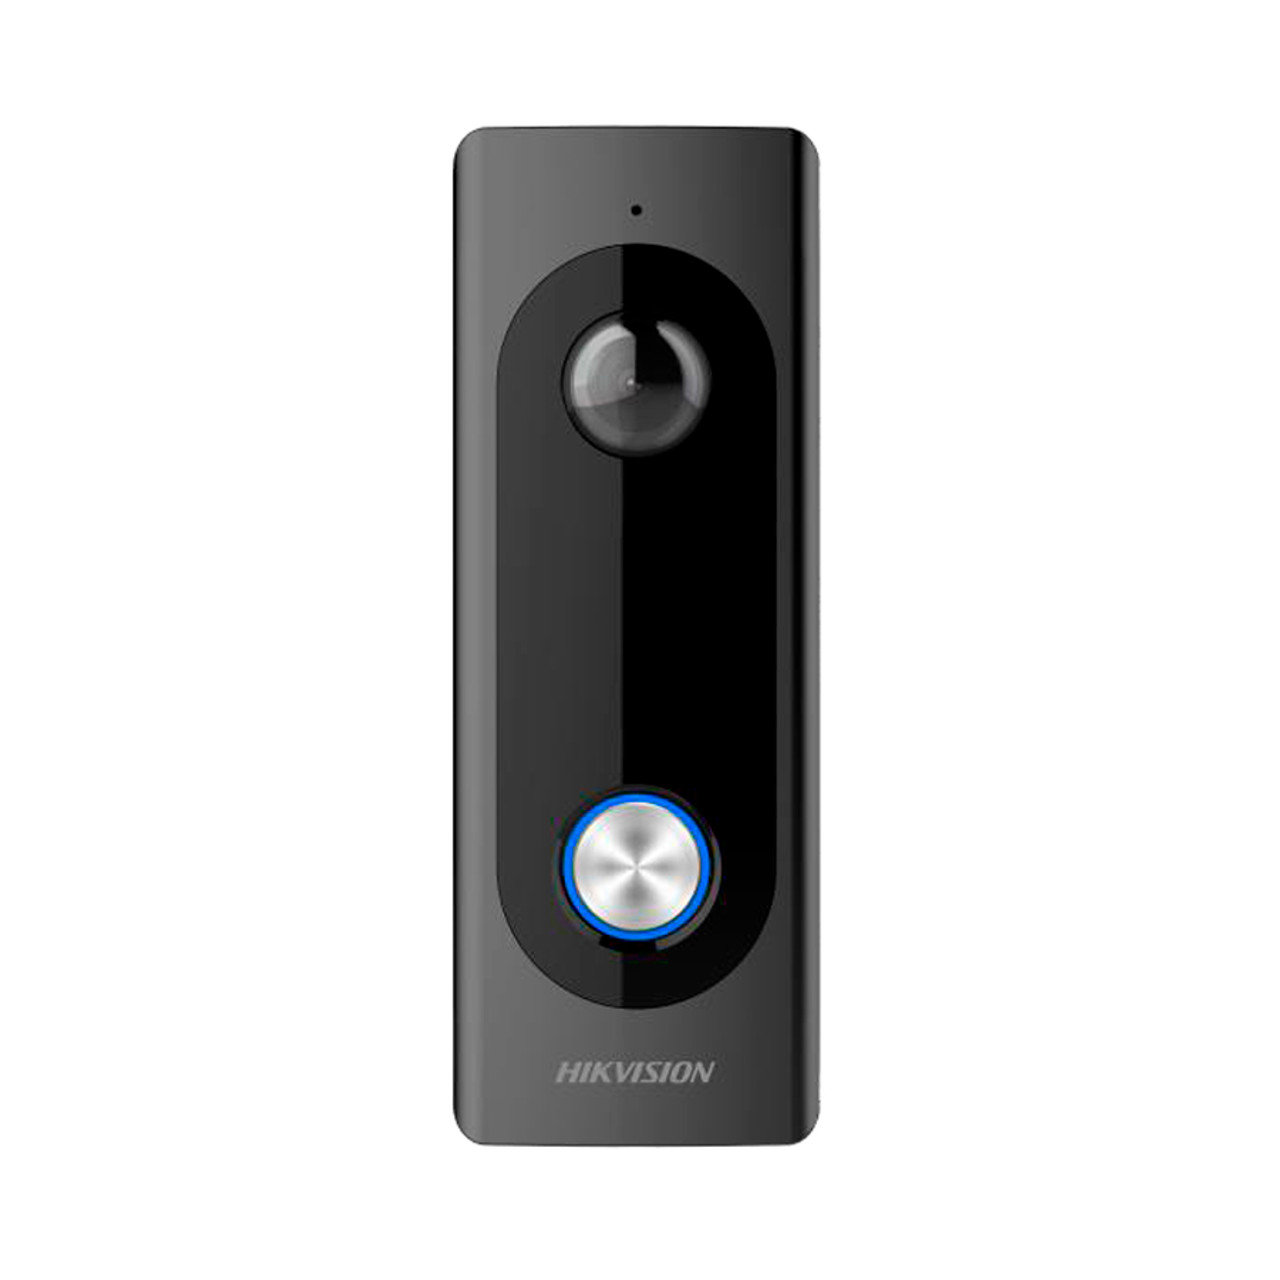 hikvision wifi doorbell review